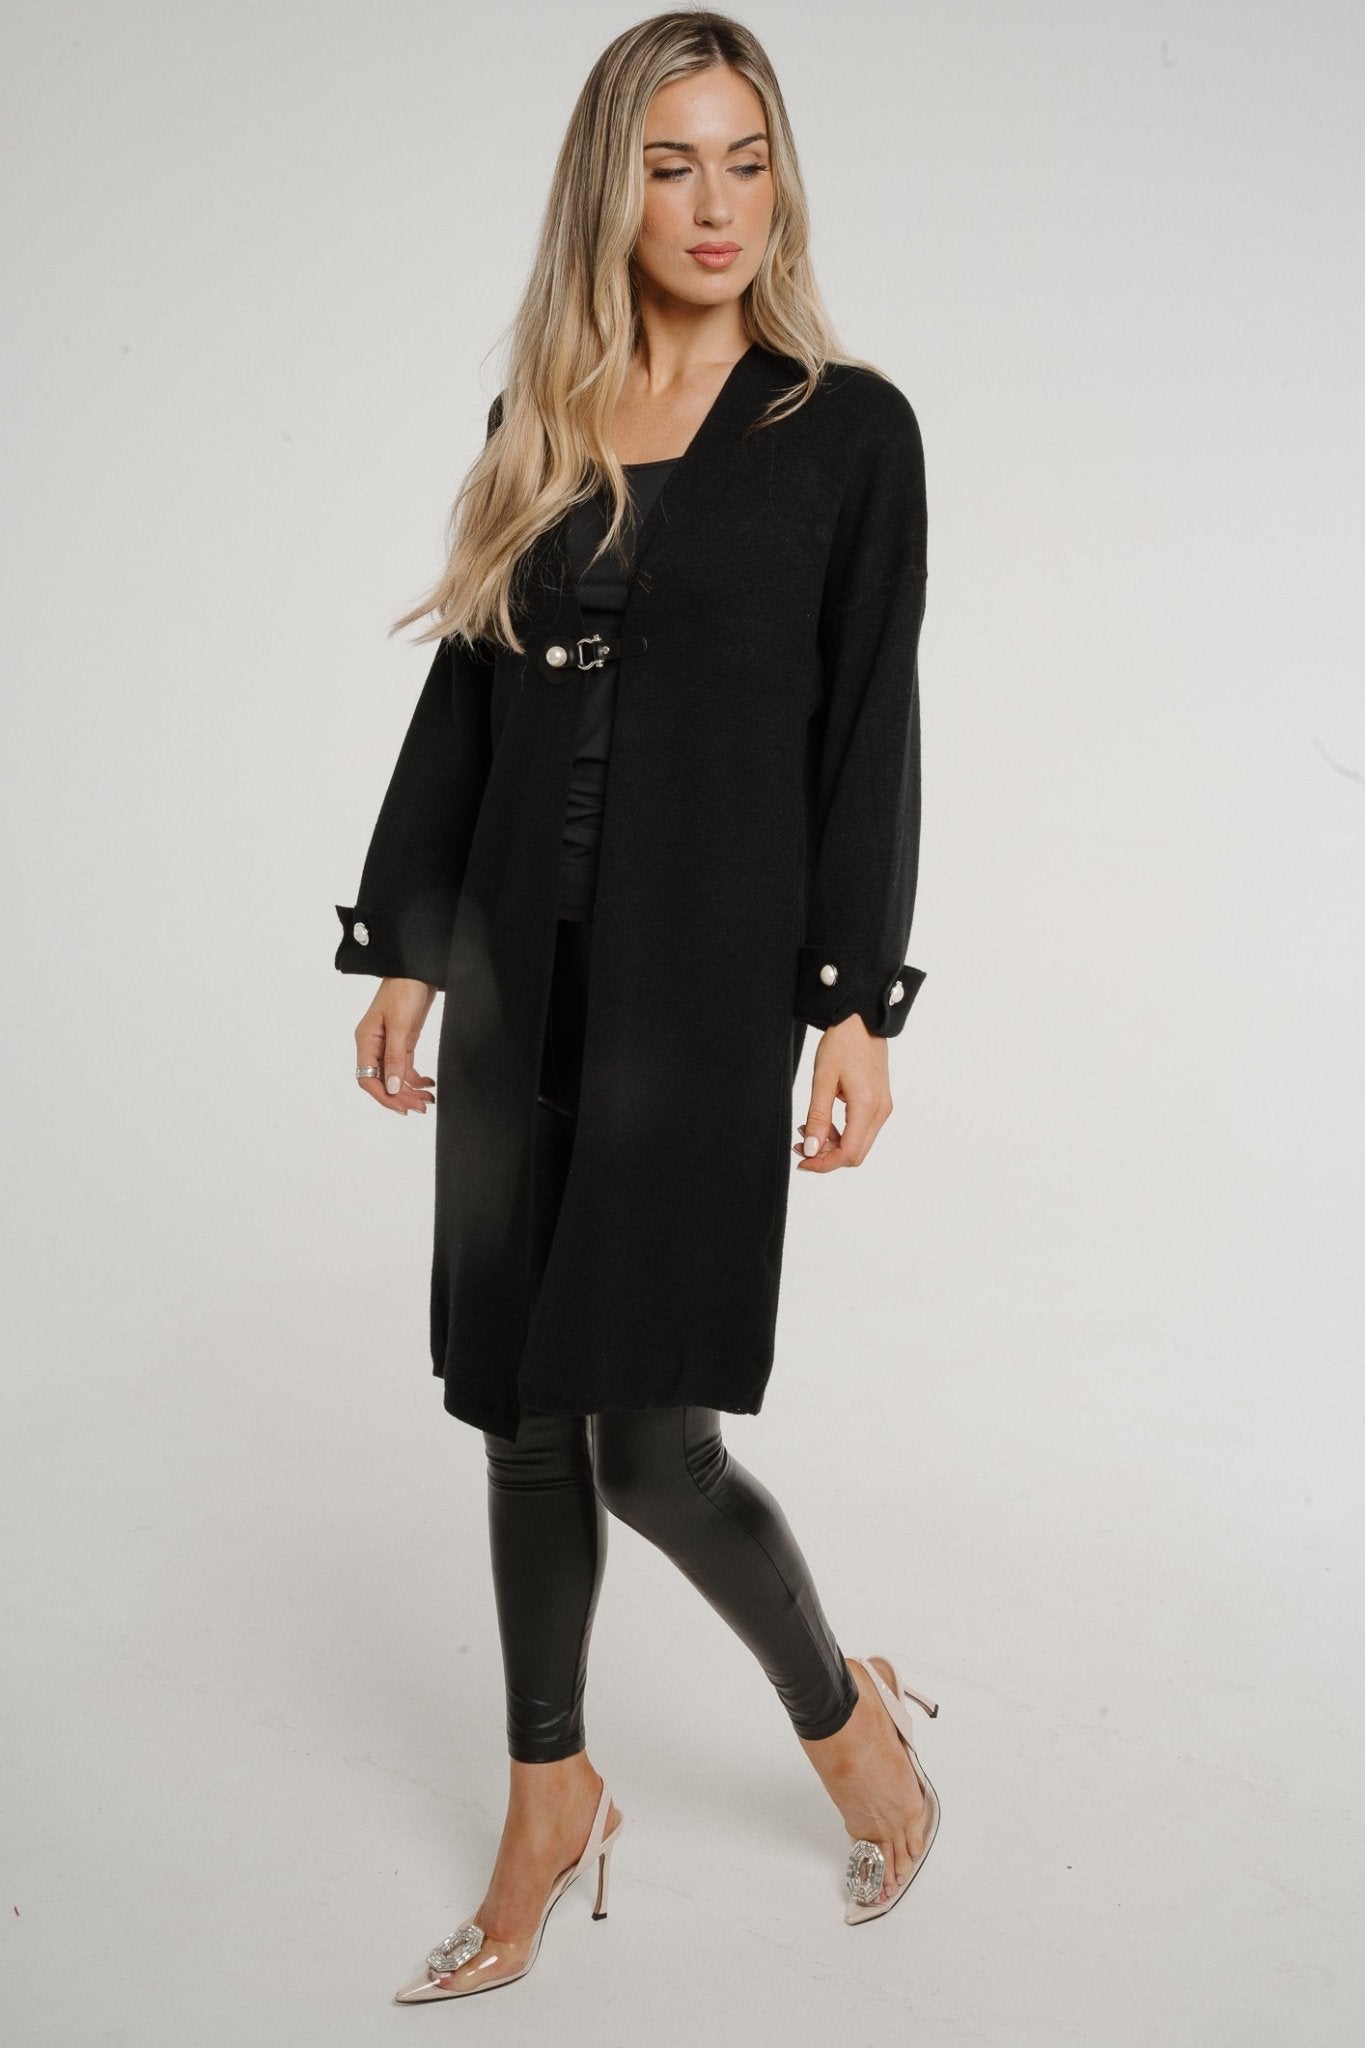 Maddie Pearl Clasp Cardigan In Black - The Walk in Wardrobe